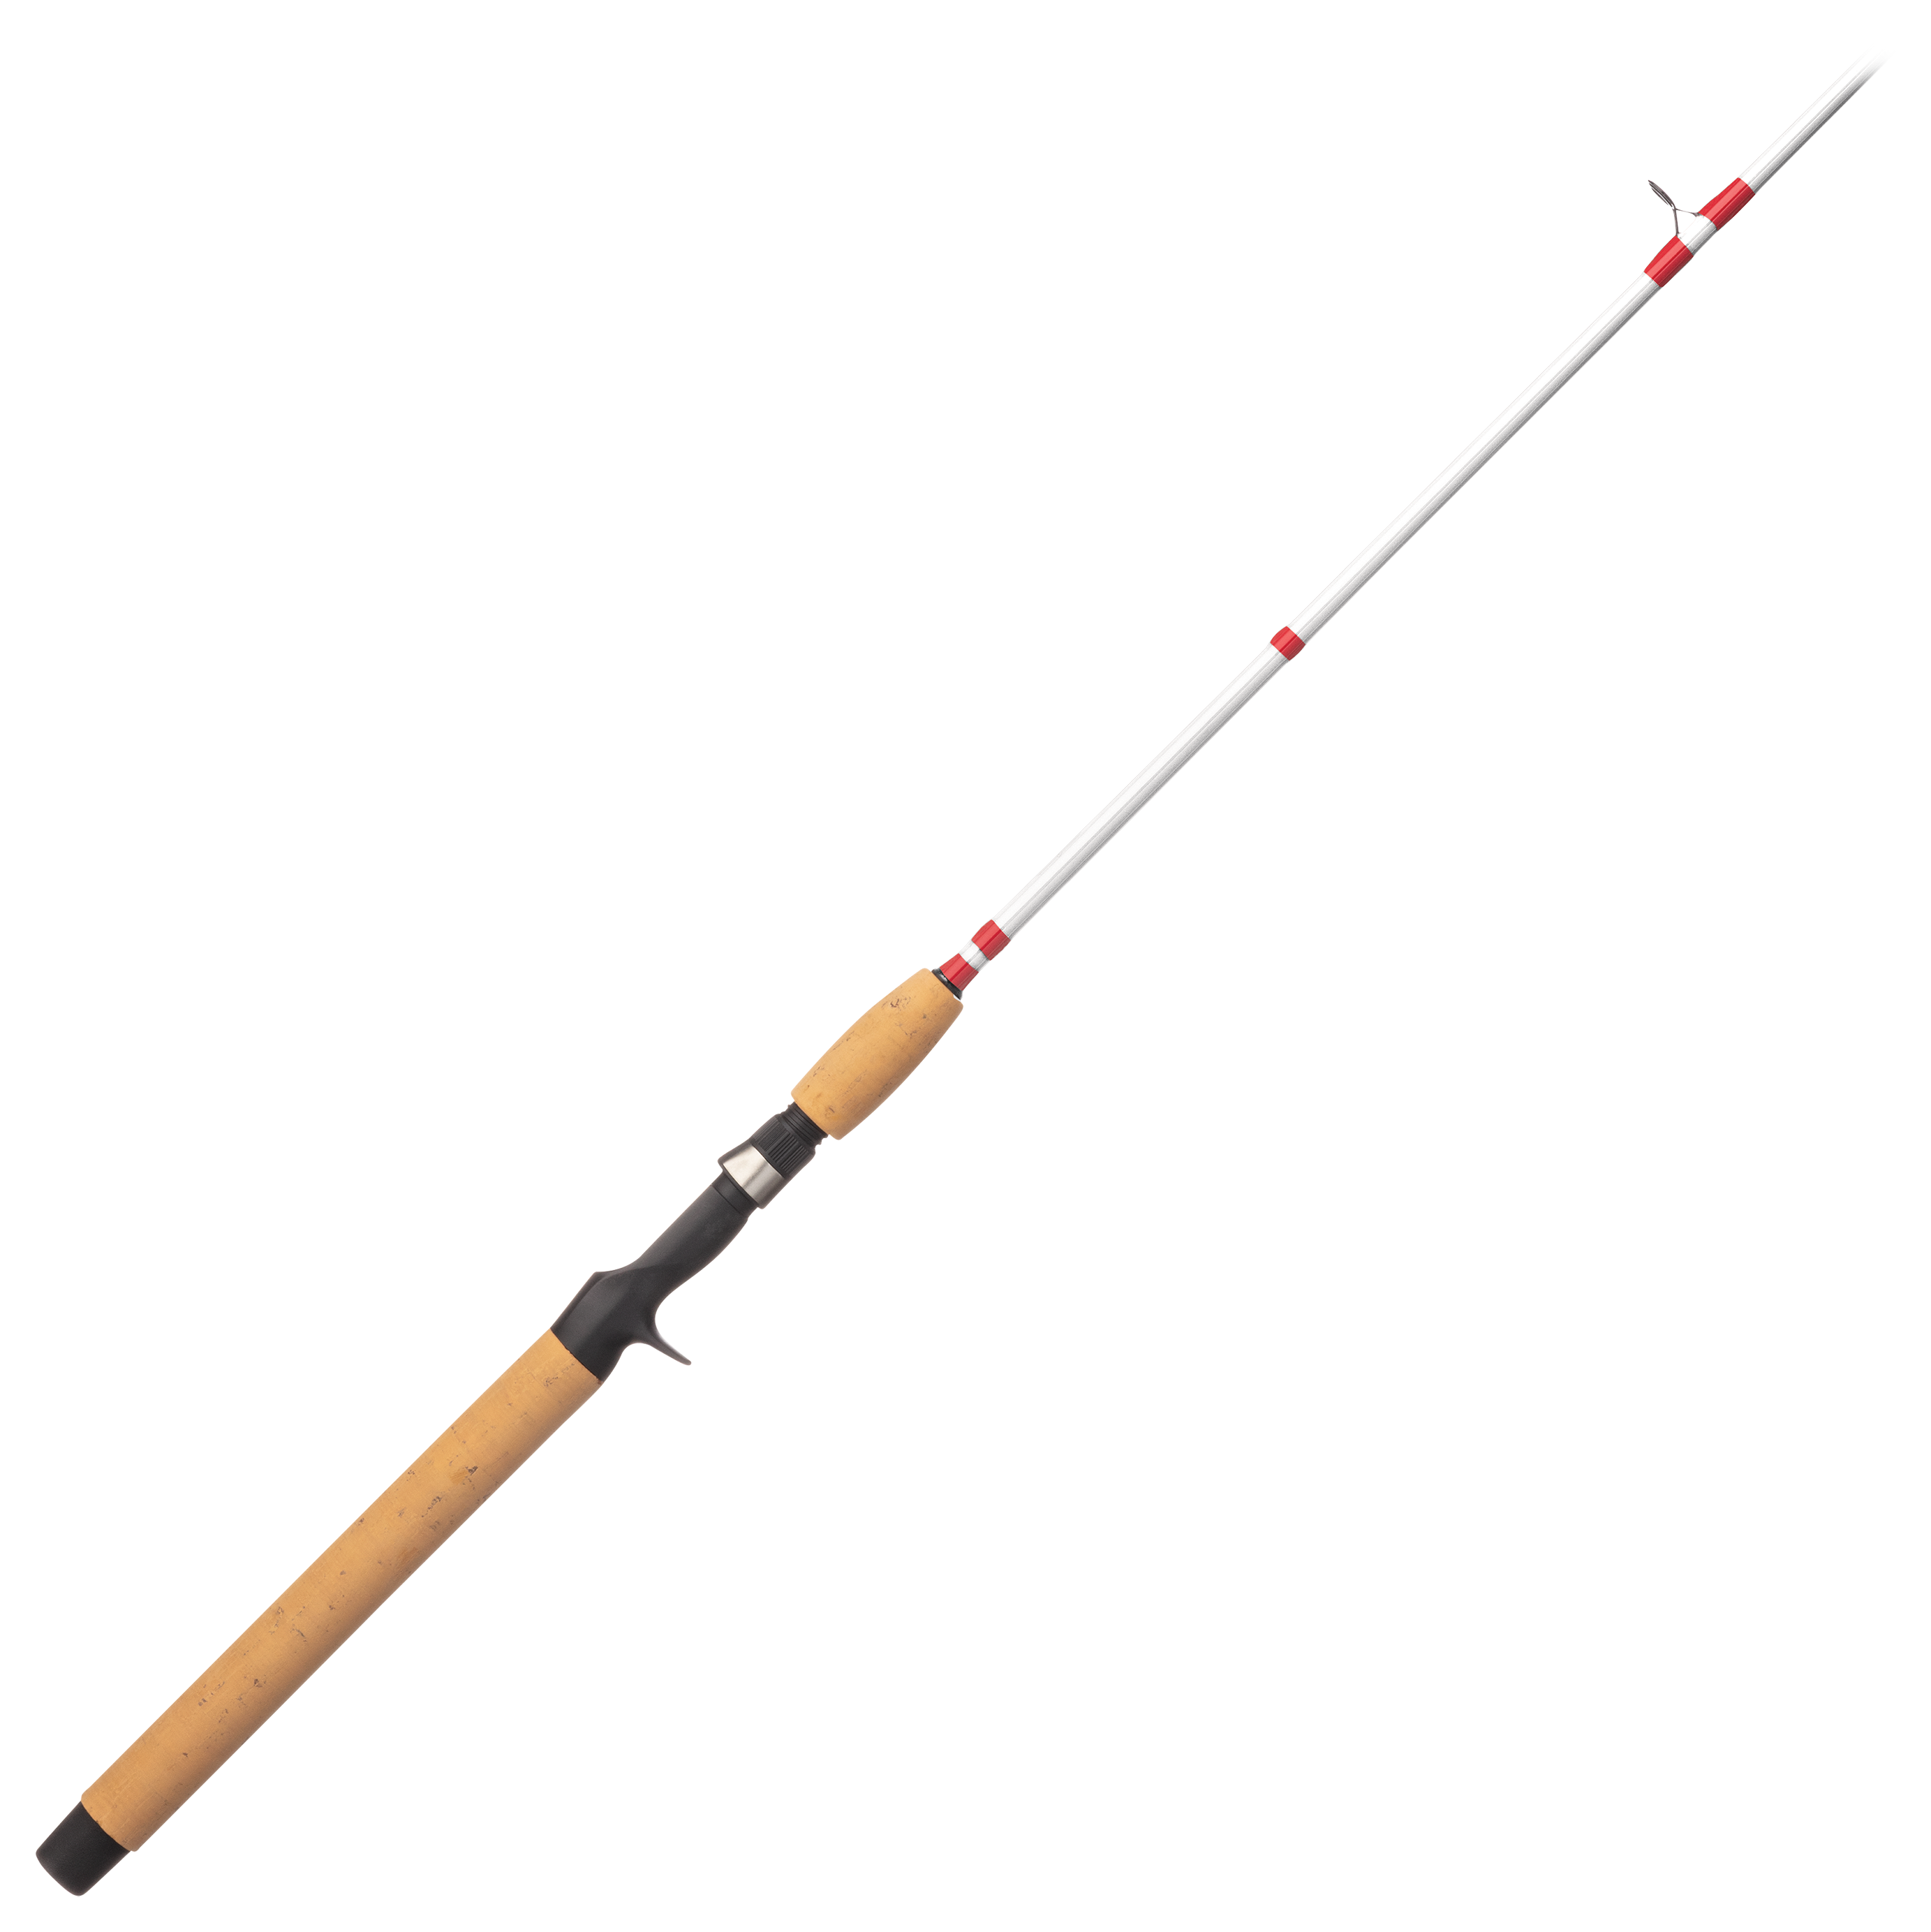 Lamiglas Kokanee 7'6 Fiberglass Fishing Rod